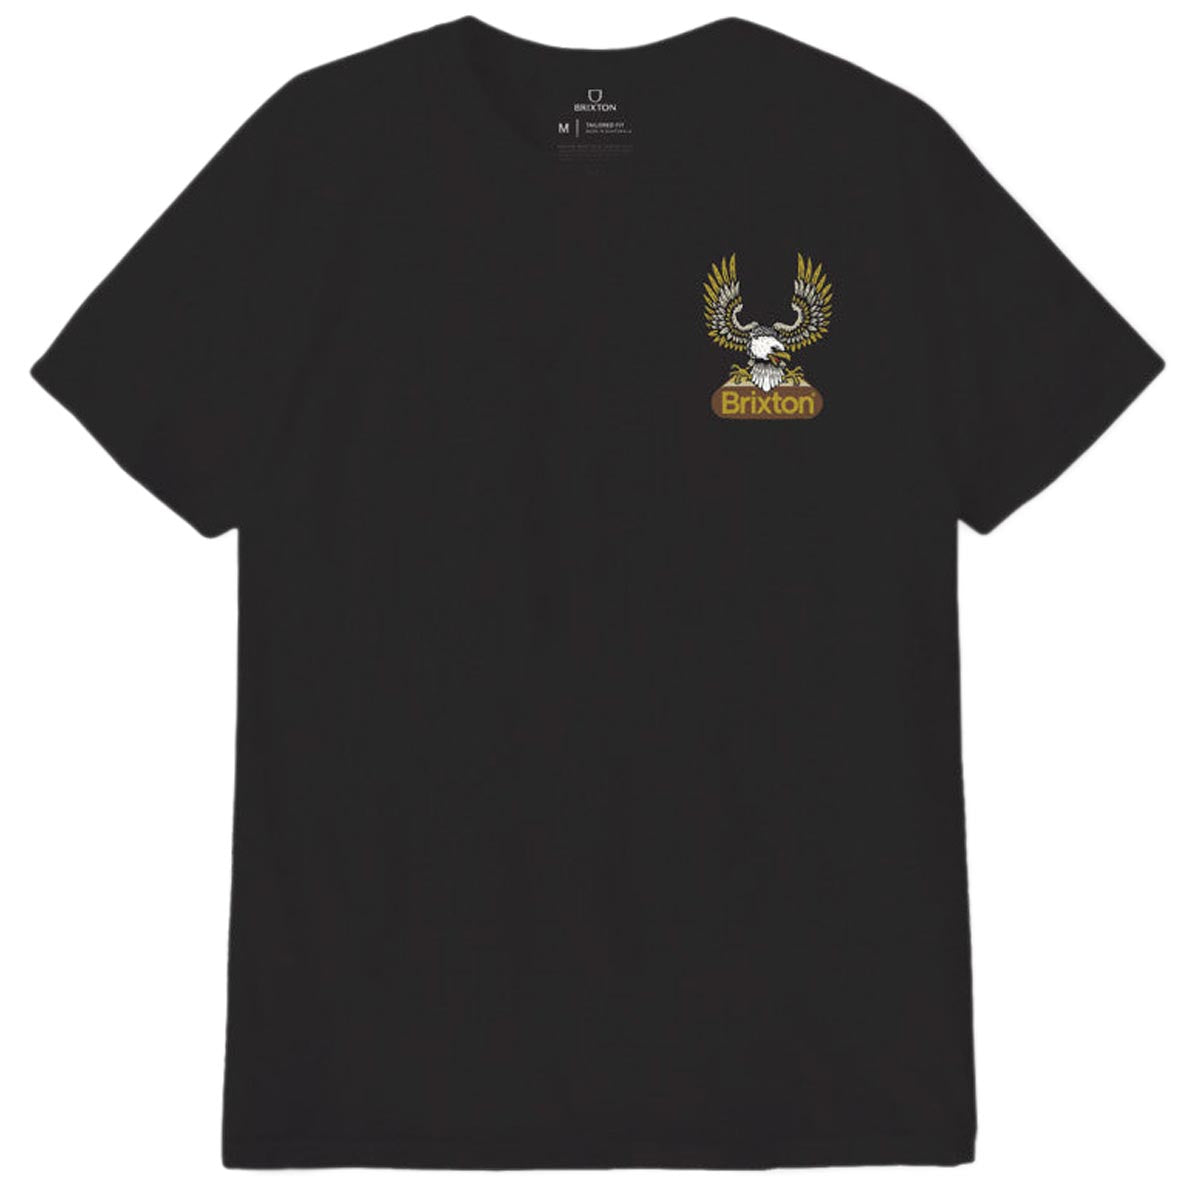 Brixton Merrick T-Shirt - Black image 2